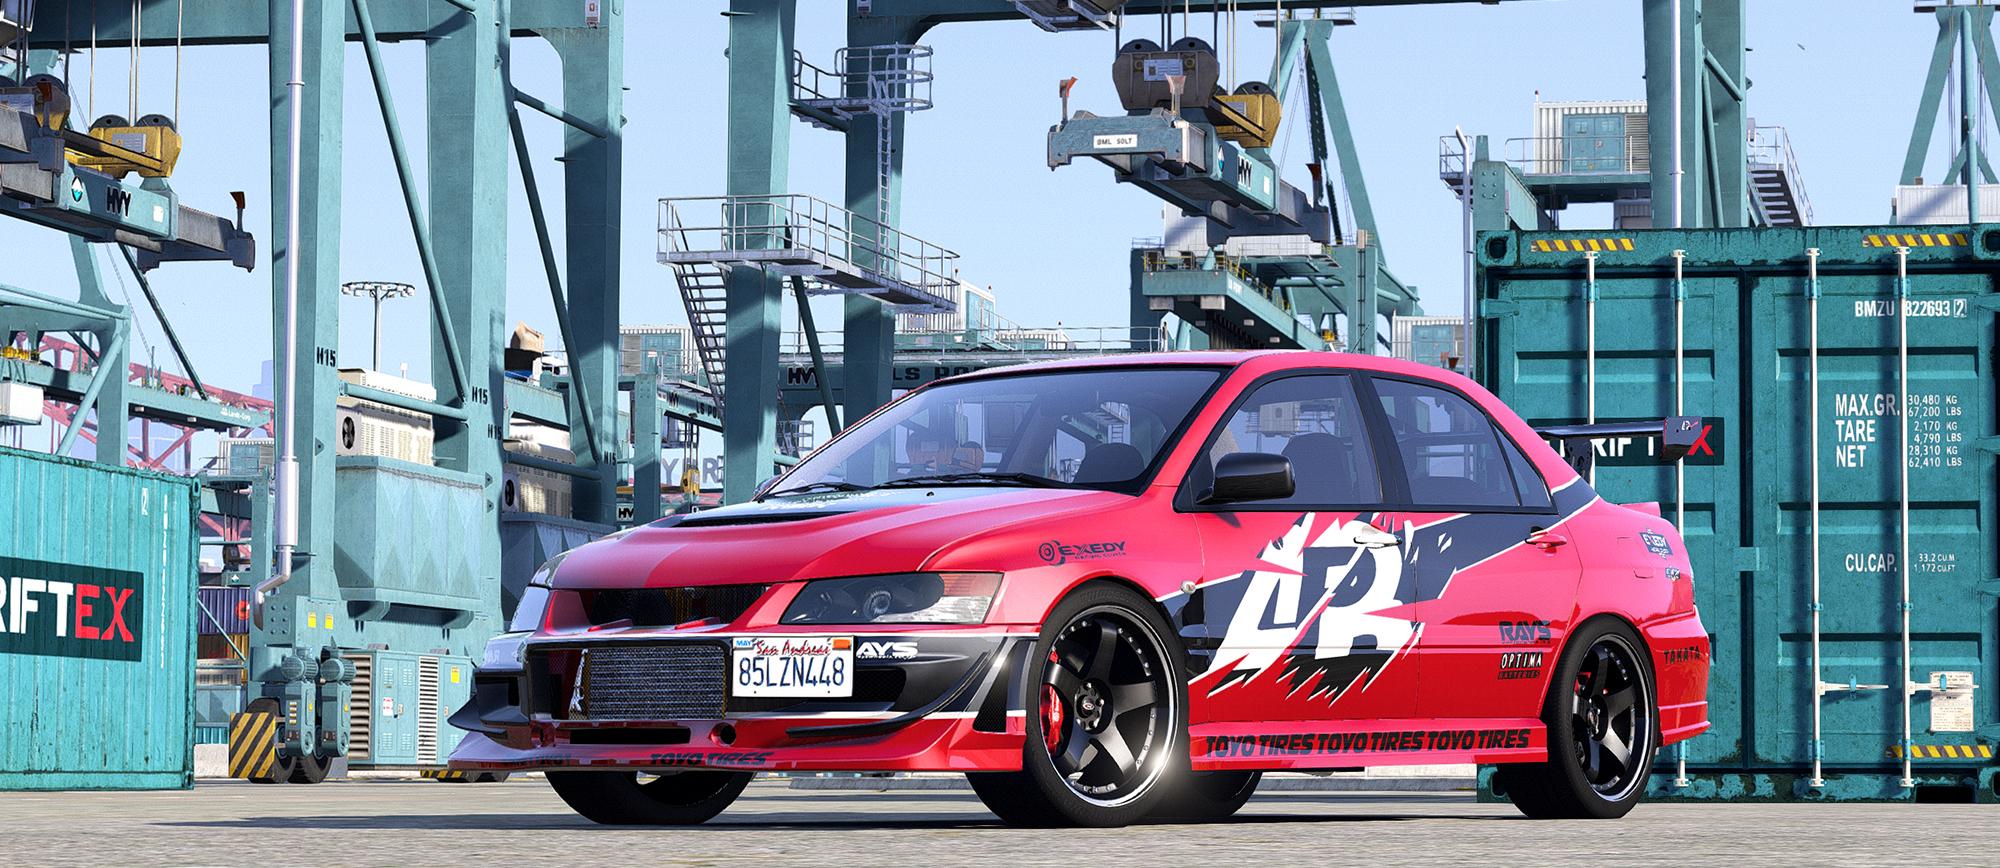 Lancer Evo Fast And Furious Tokyo Drift